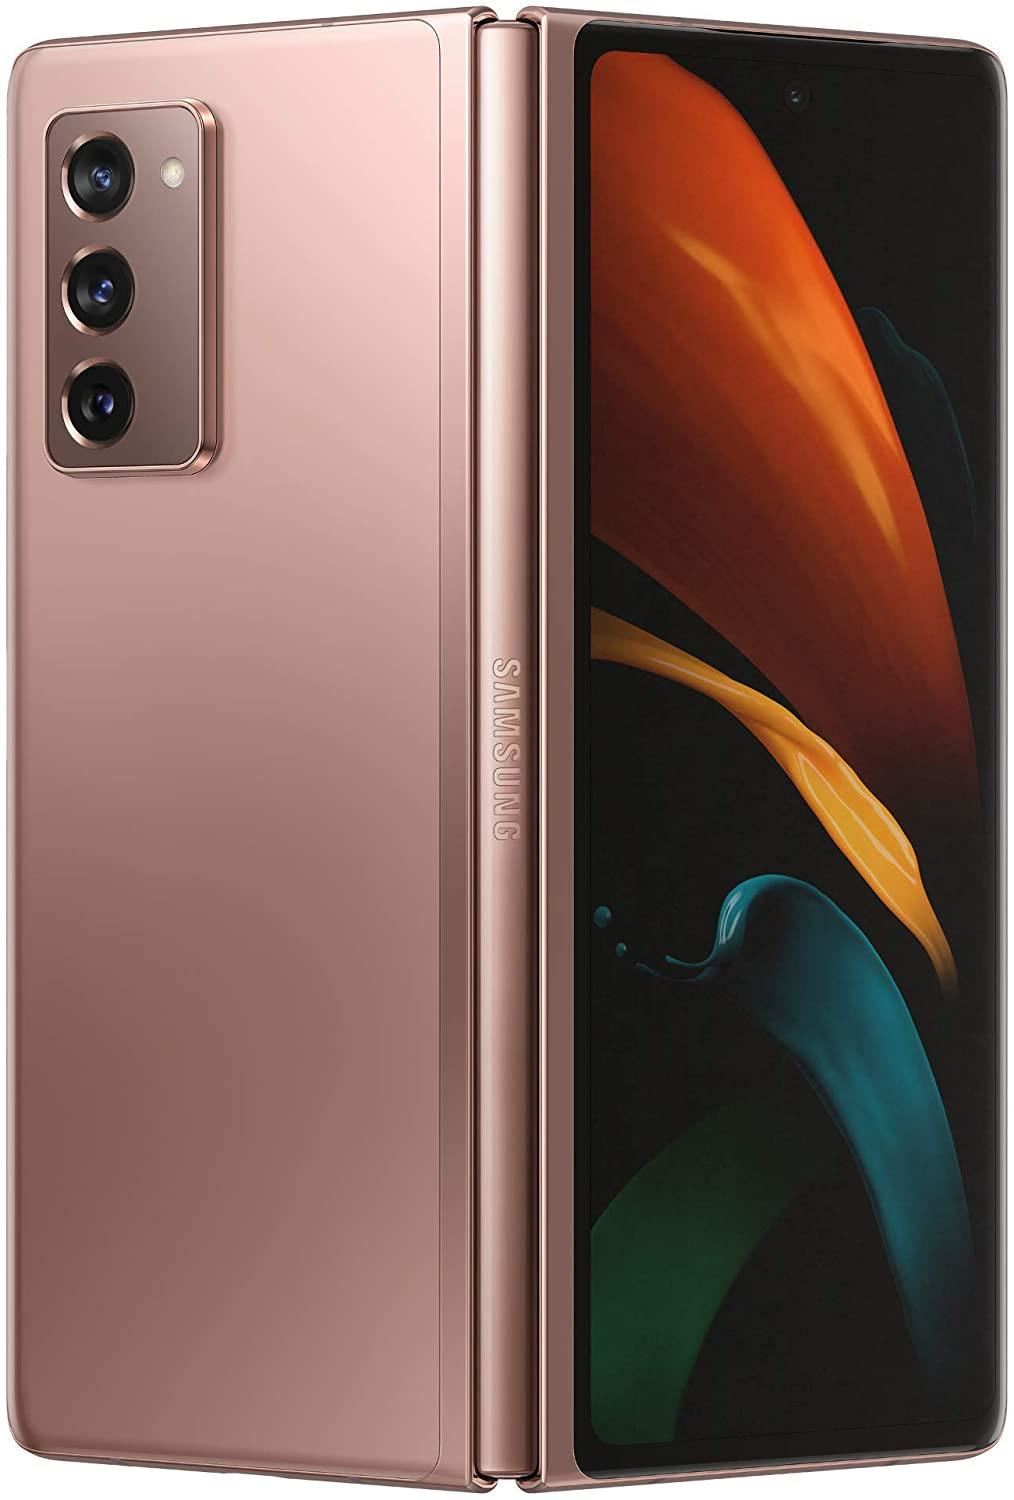 Samsung Galaxy Z Fold2 5G Smartphone Unlocked 256-512GB